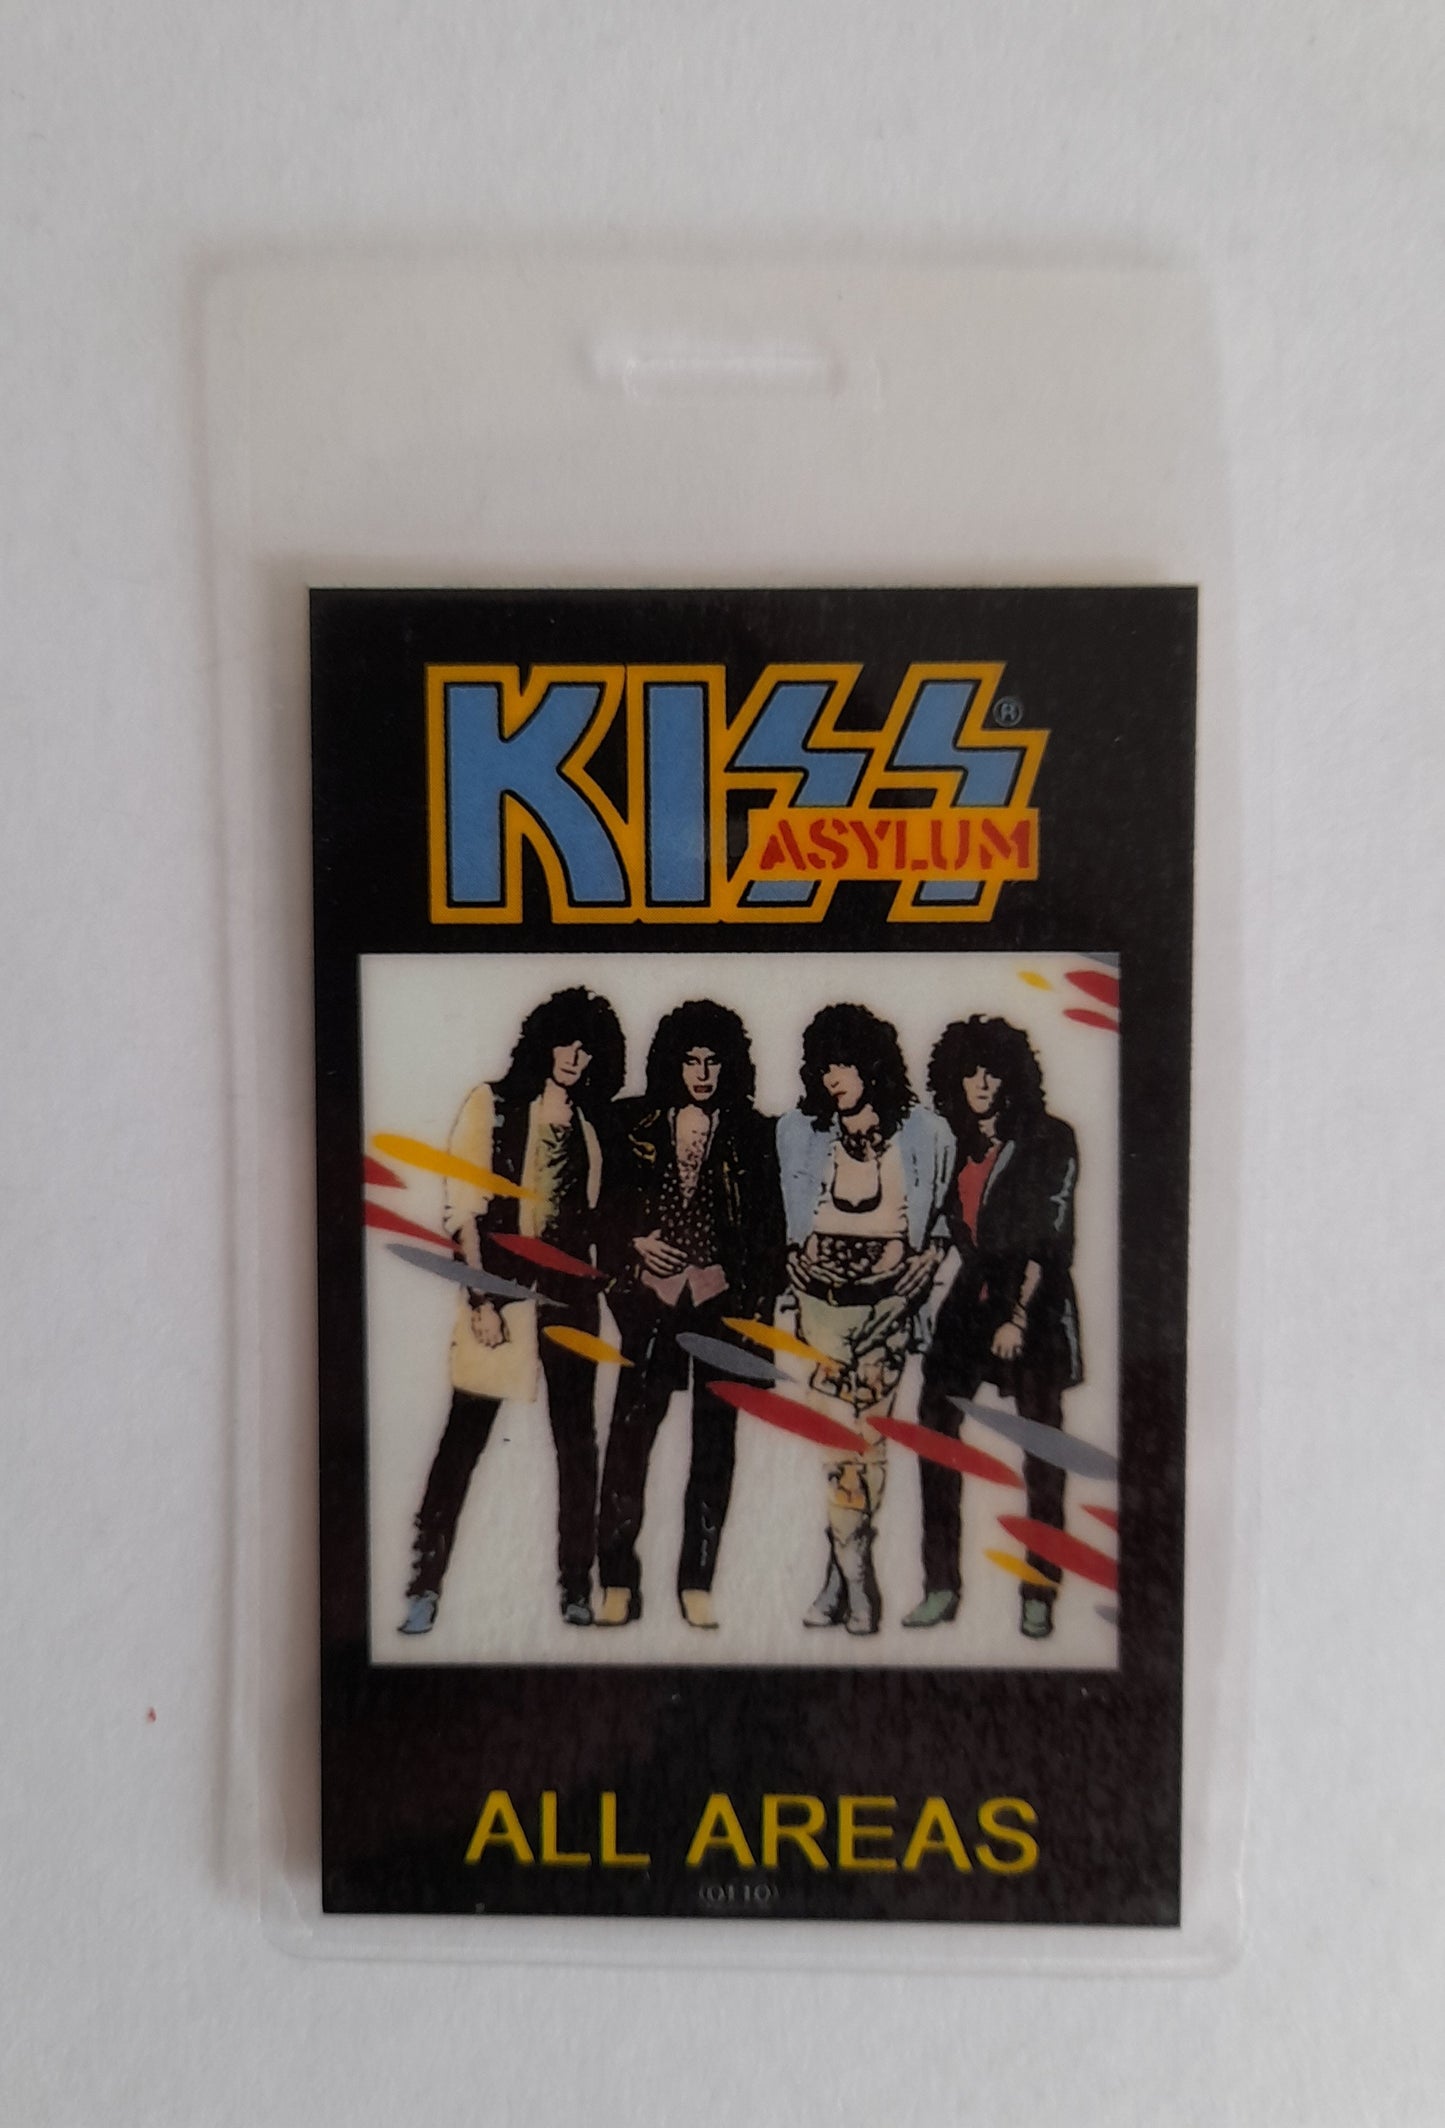 KISS - Asylum Tour 1985/86 Backstage Pass